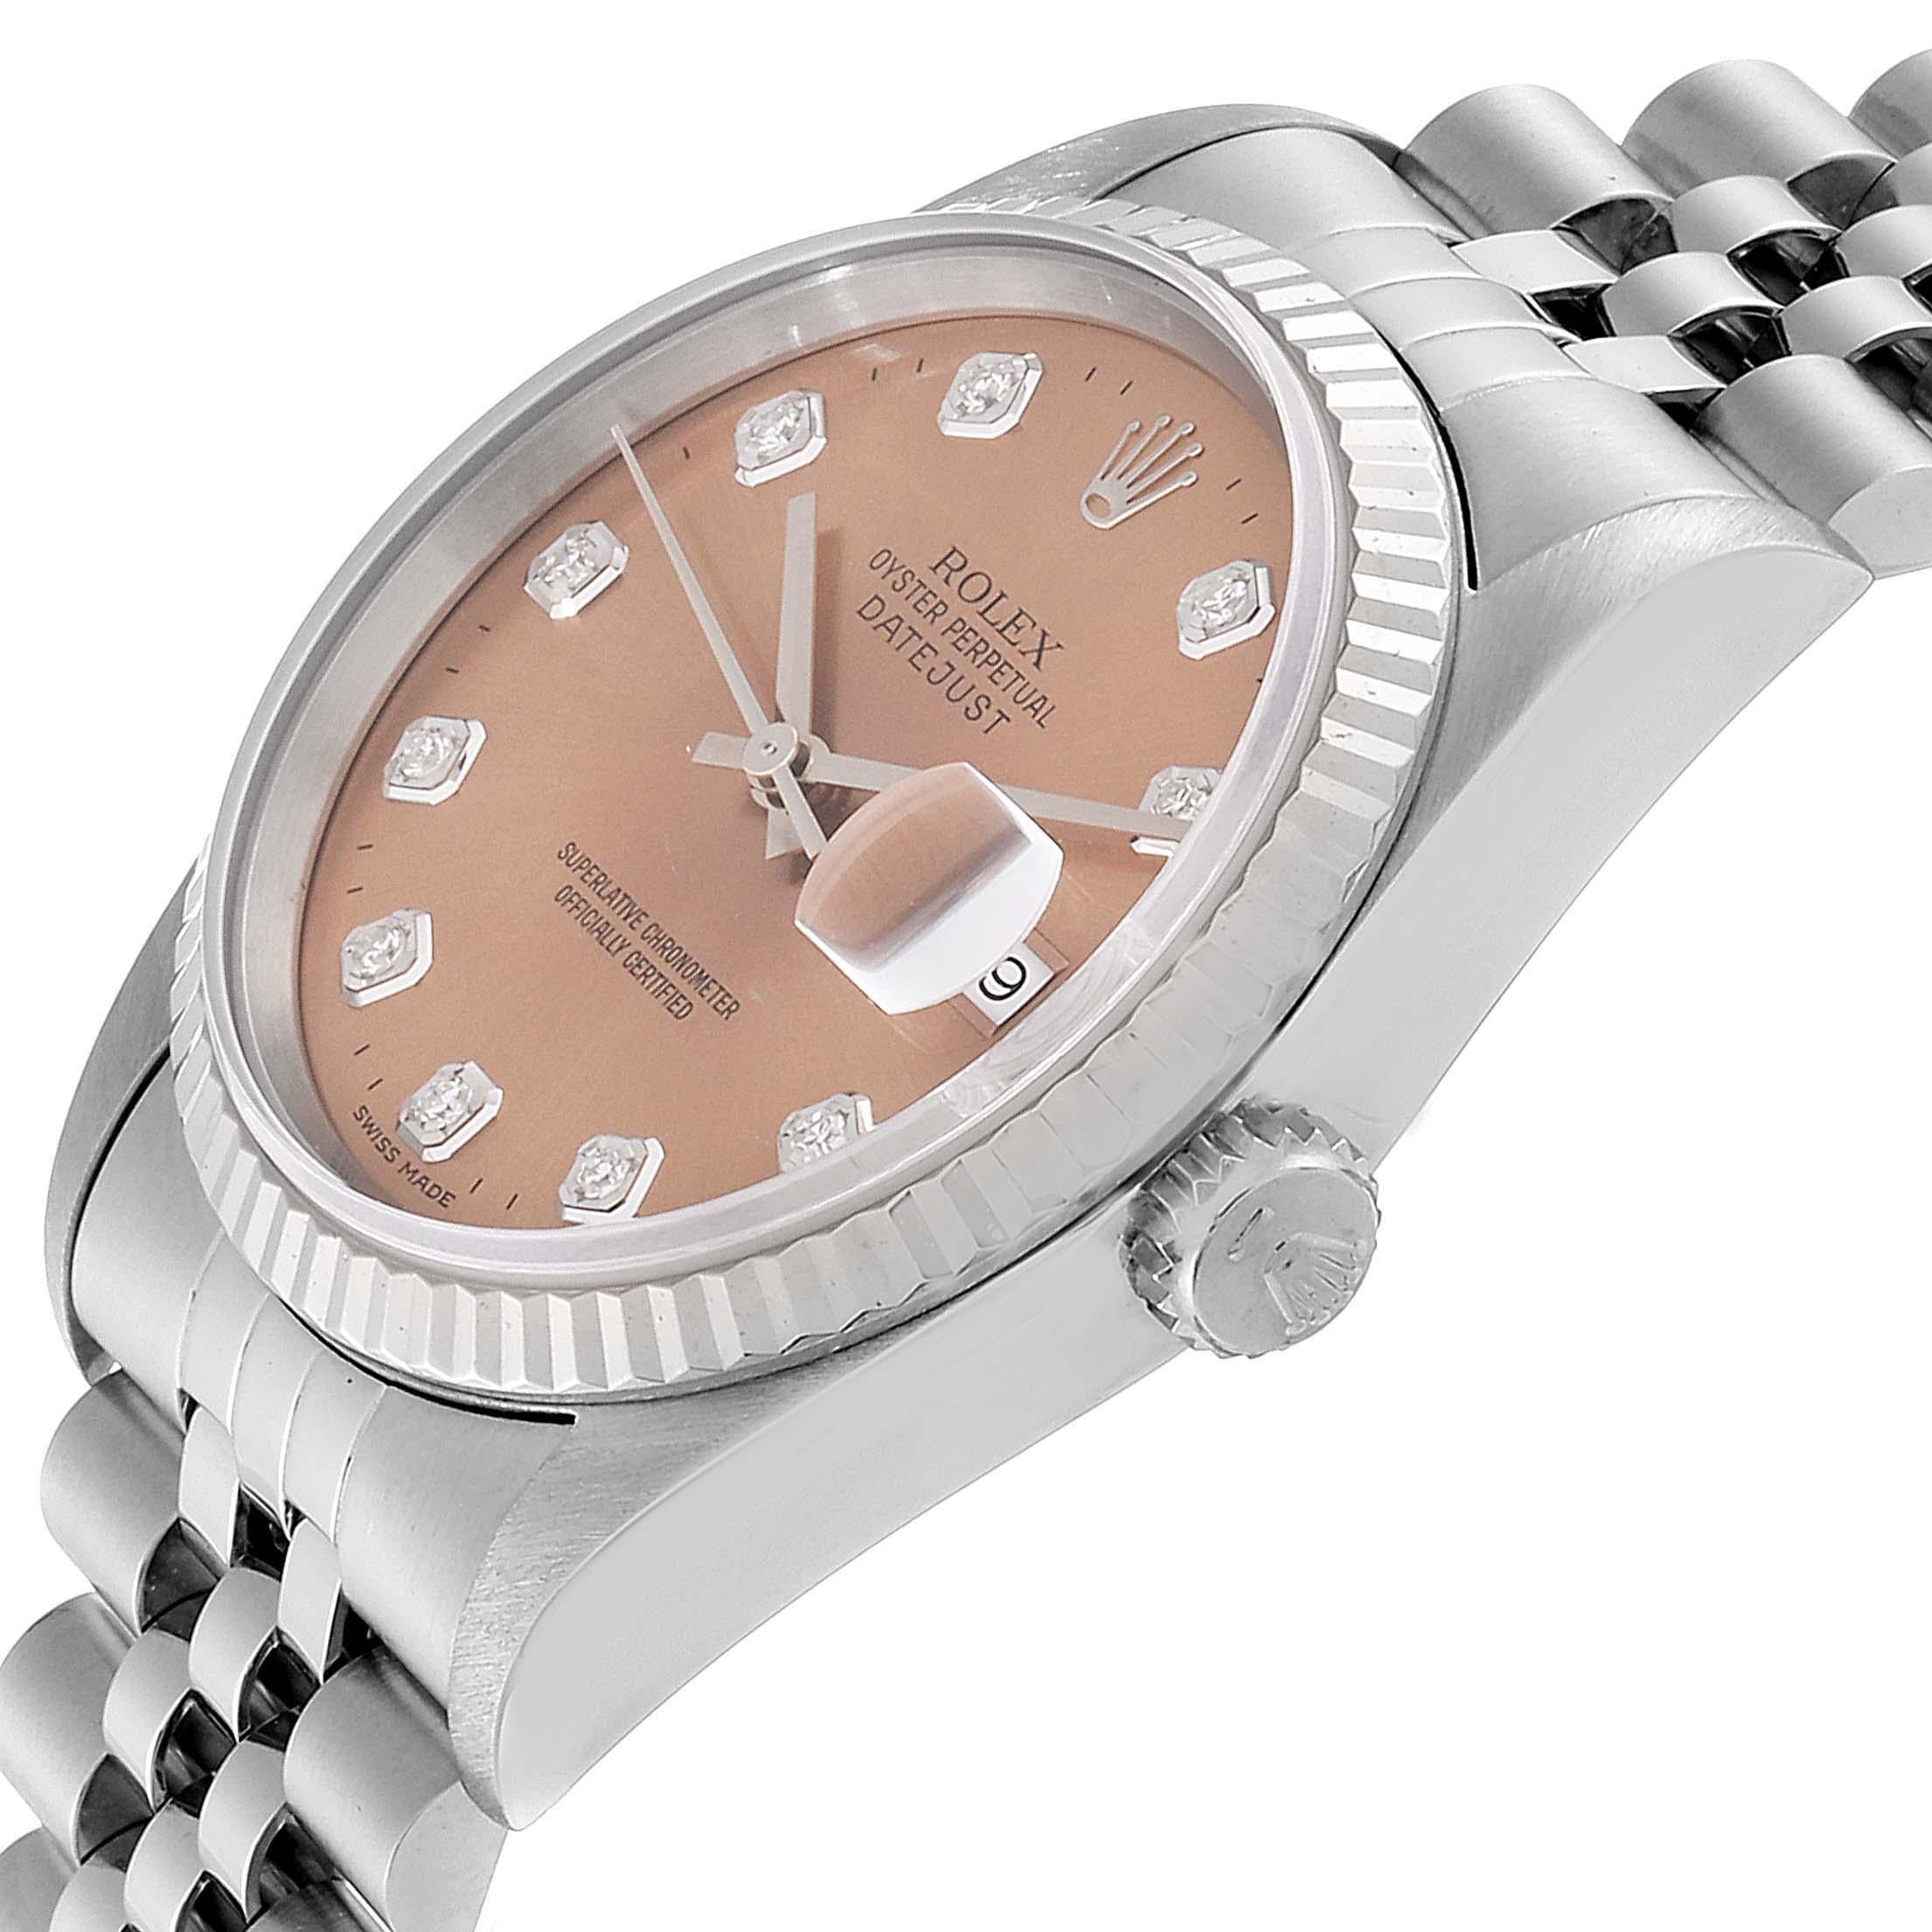 Rolex Datejust Steel White Gold Salmon Diamond Dial Men's Watch 16234 For Sale 1